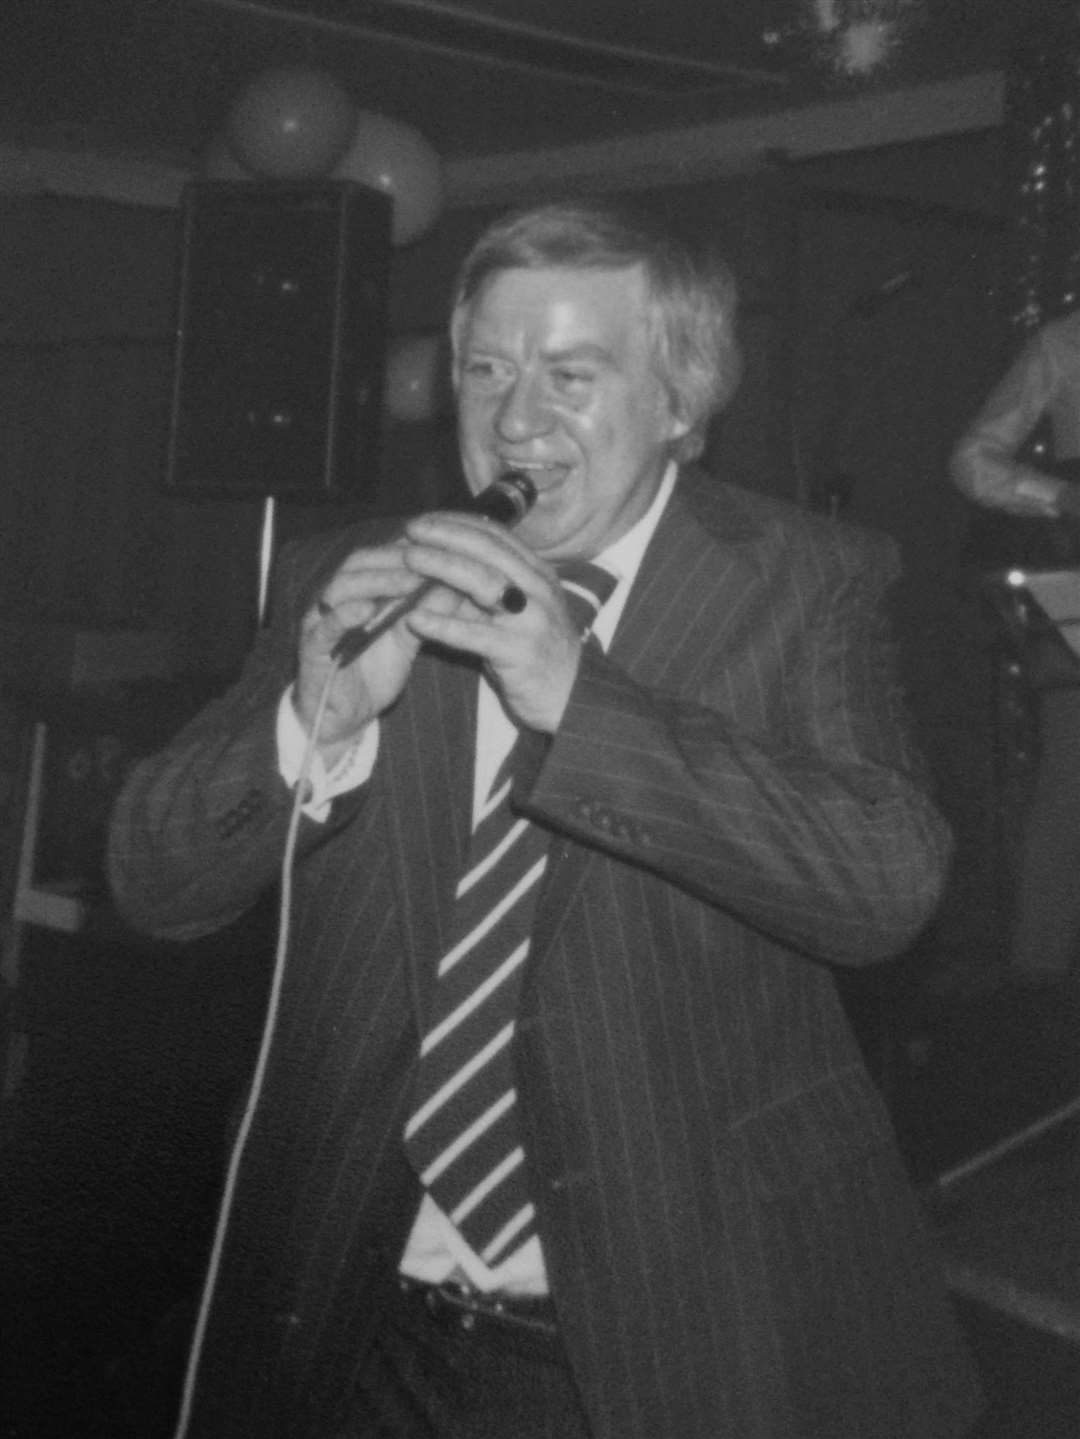 Sheppey entertainer George 'Georgie Dee' Dickson doing what he enjoyed best - singing